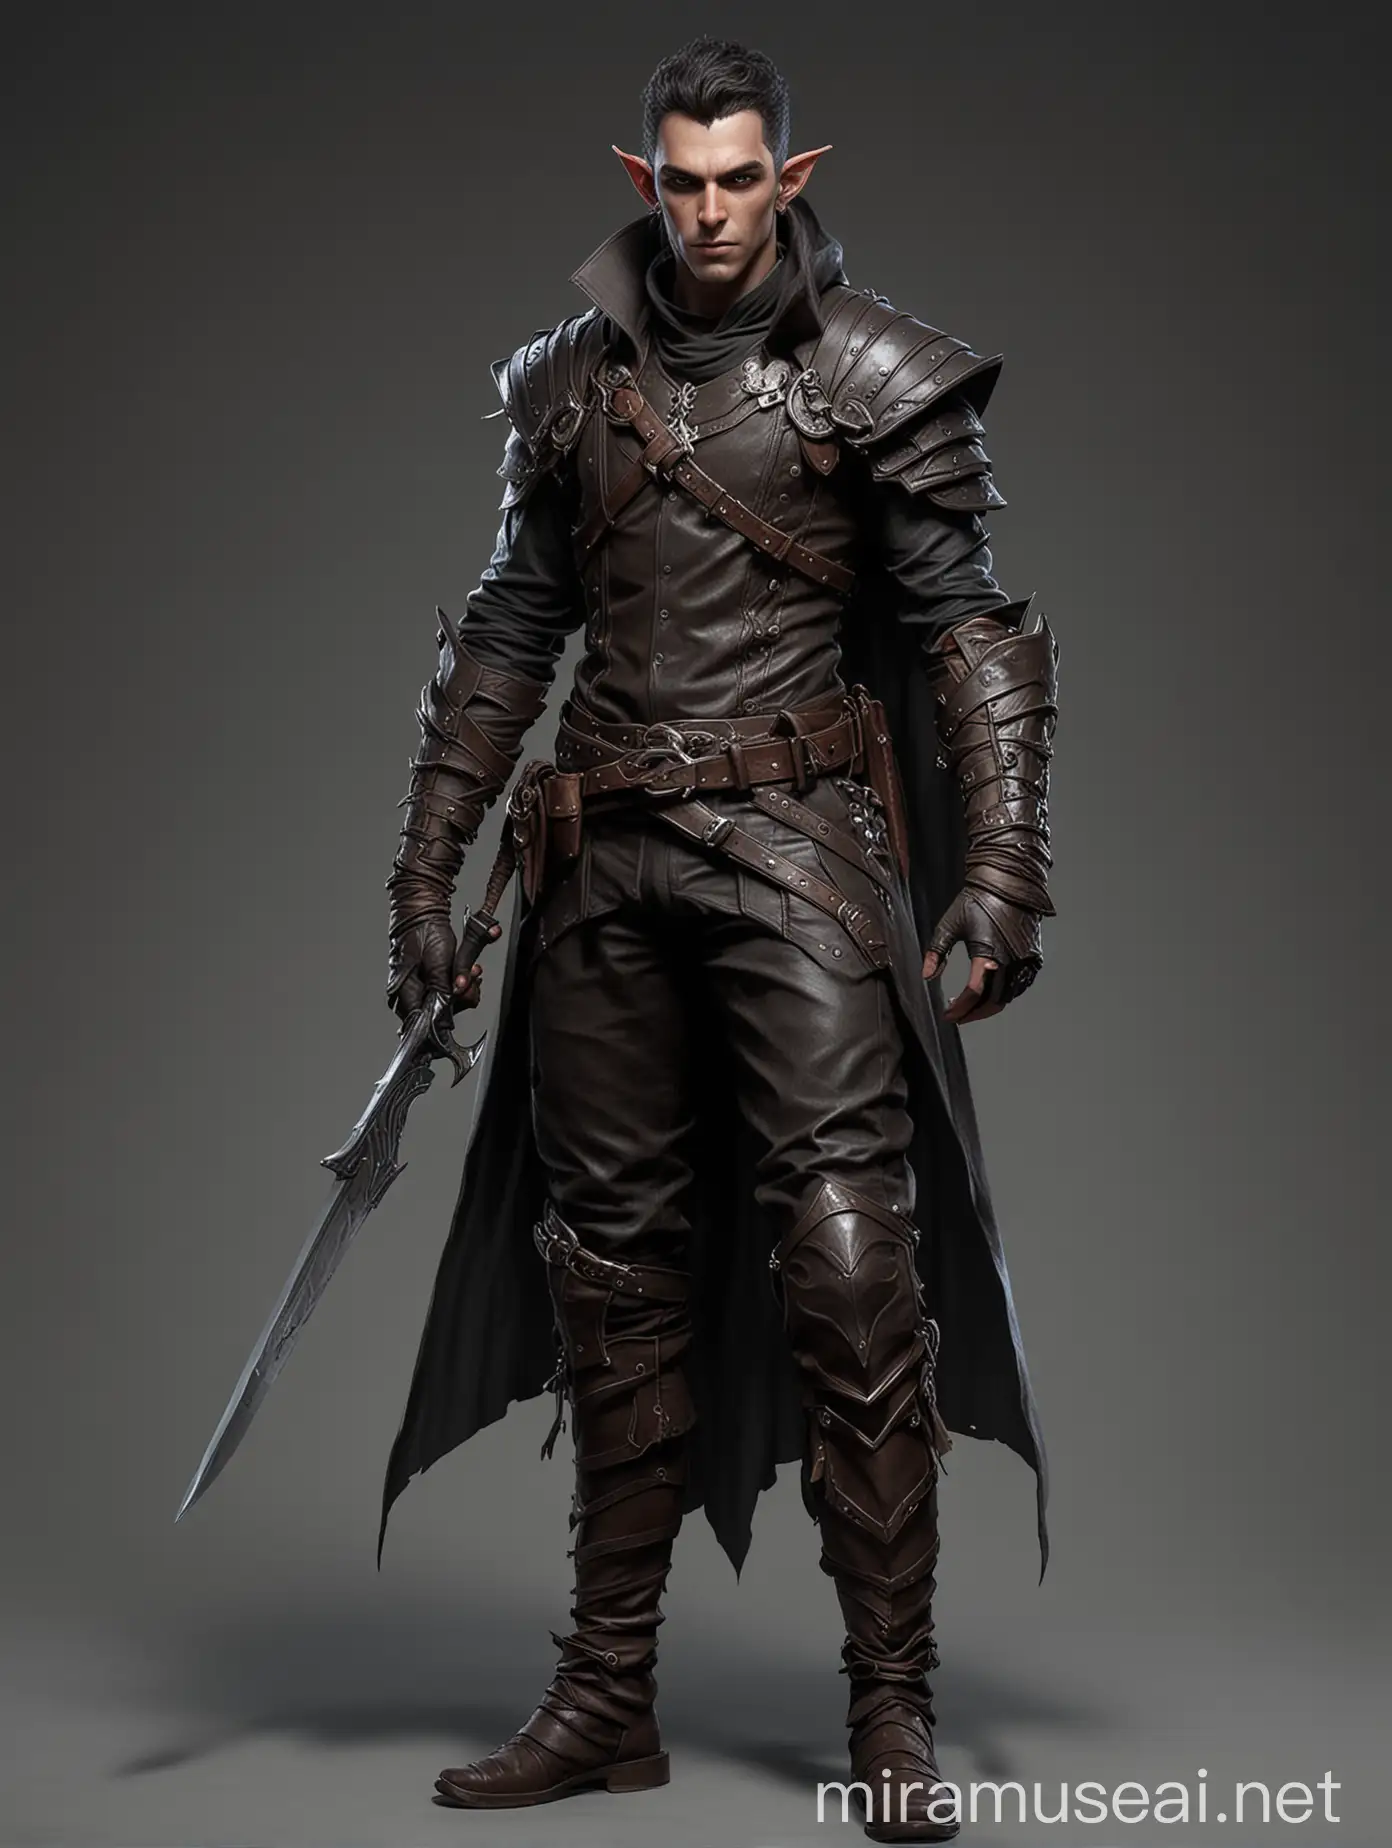 Dark male elf assassin, adventurer, leather clothes, daggers in hands, fantasy character design, fullbody,  